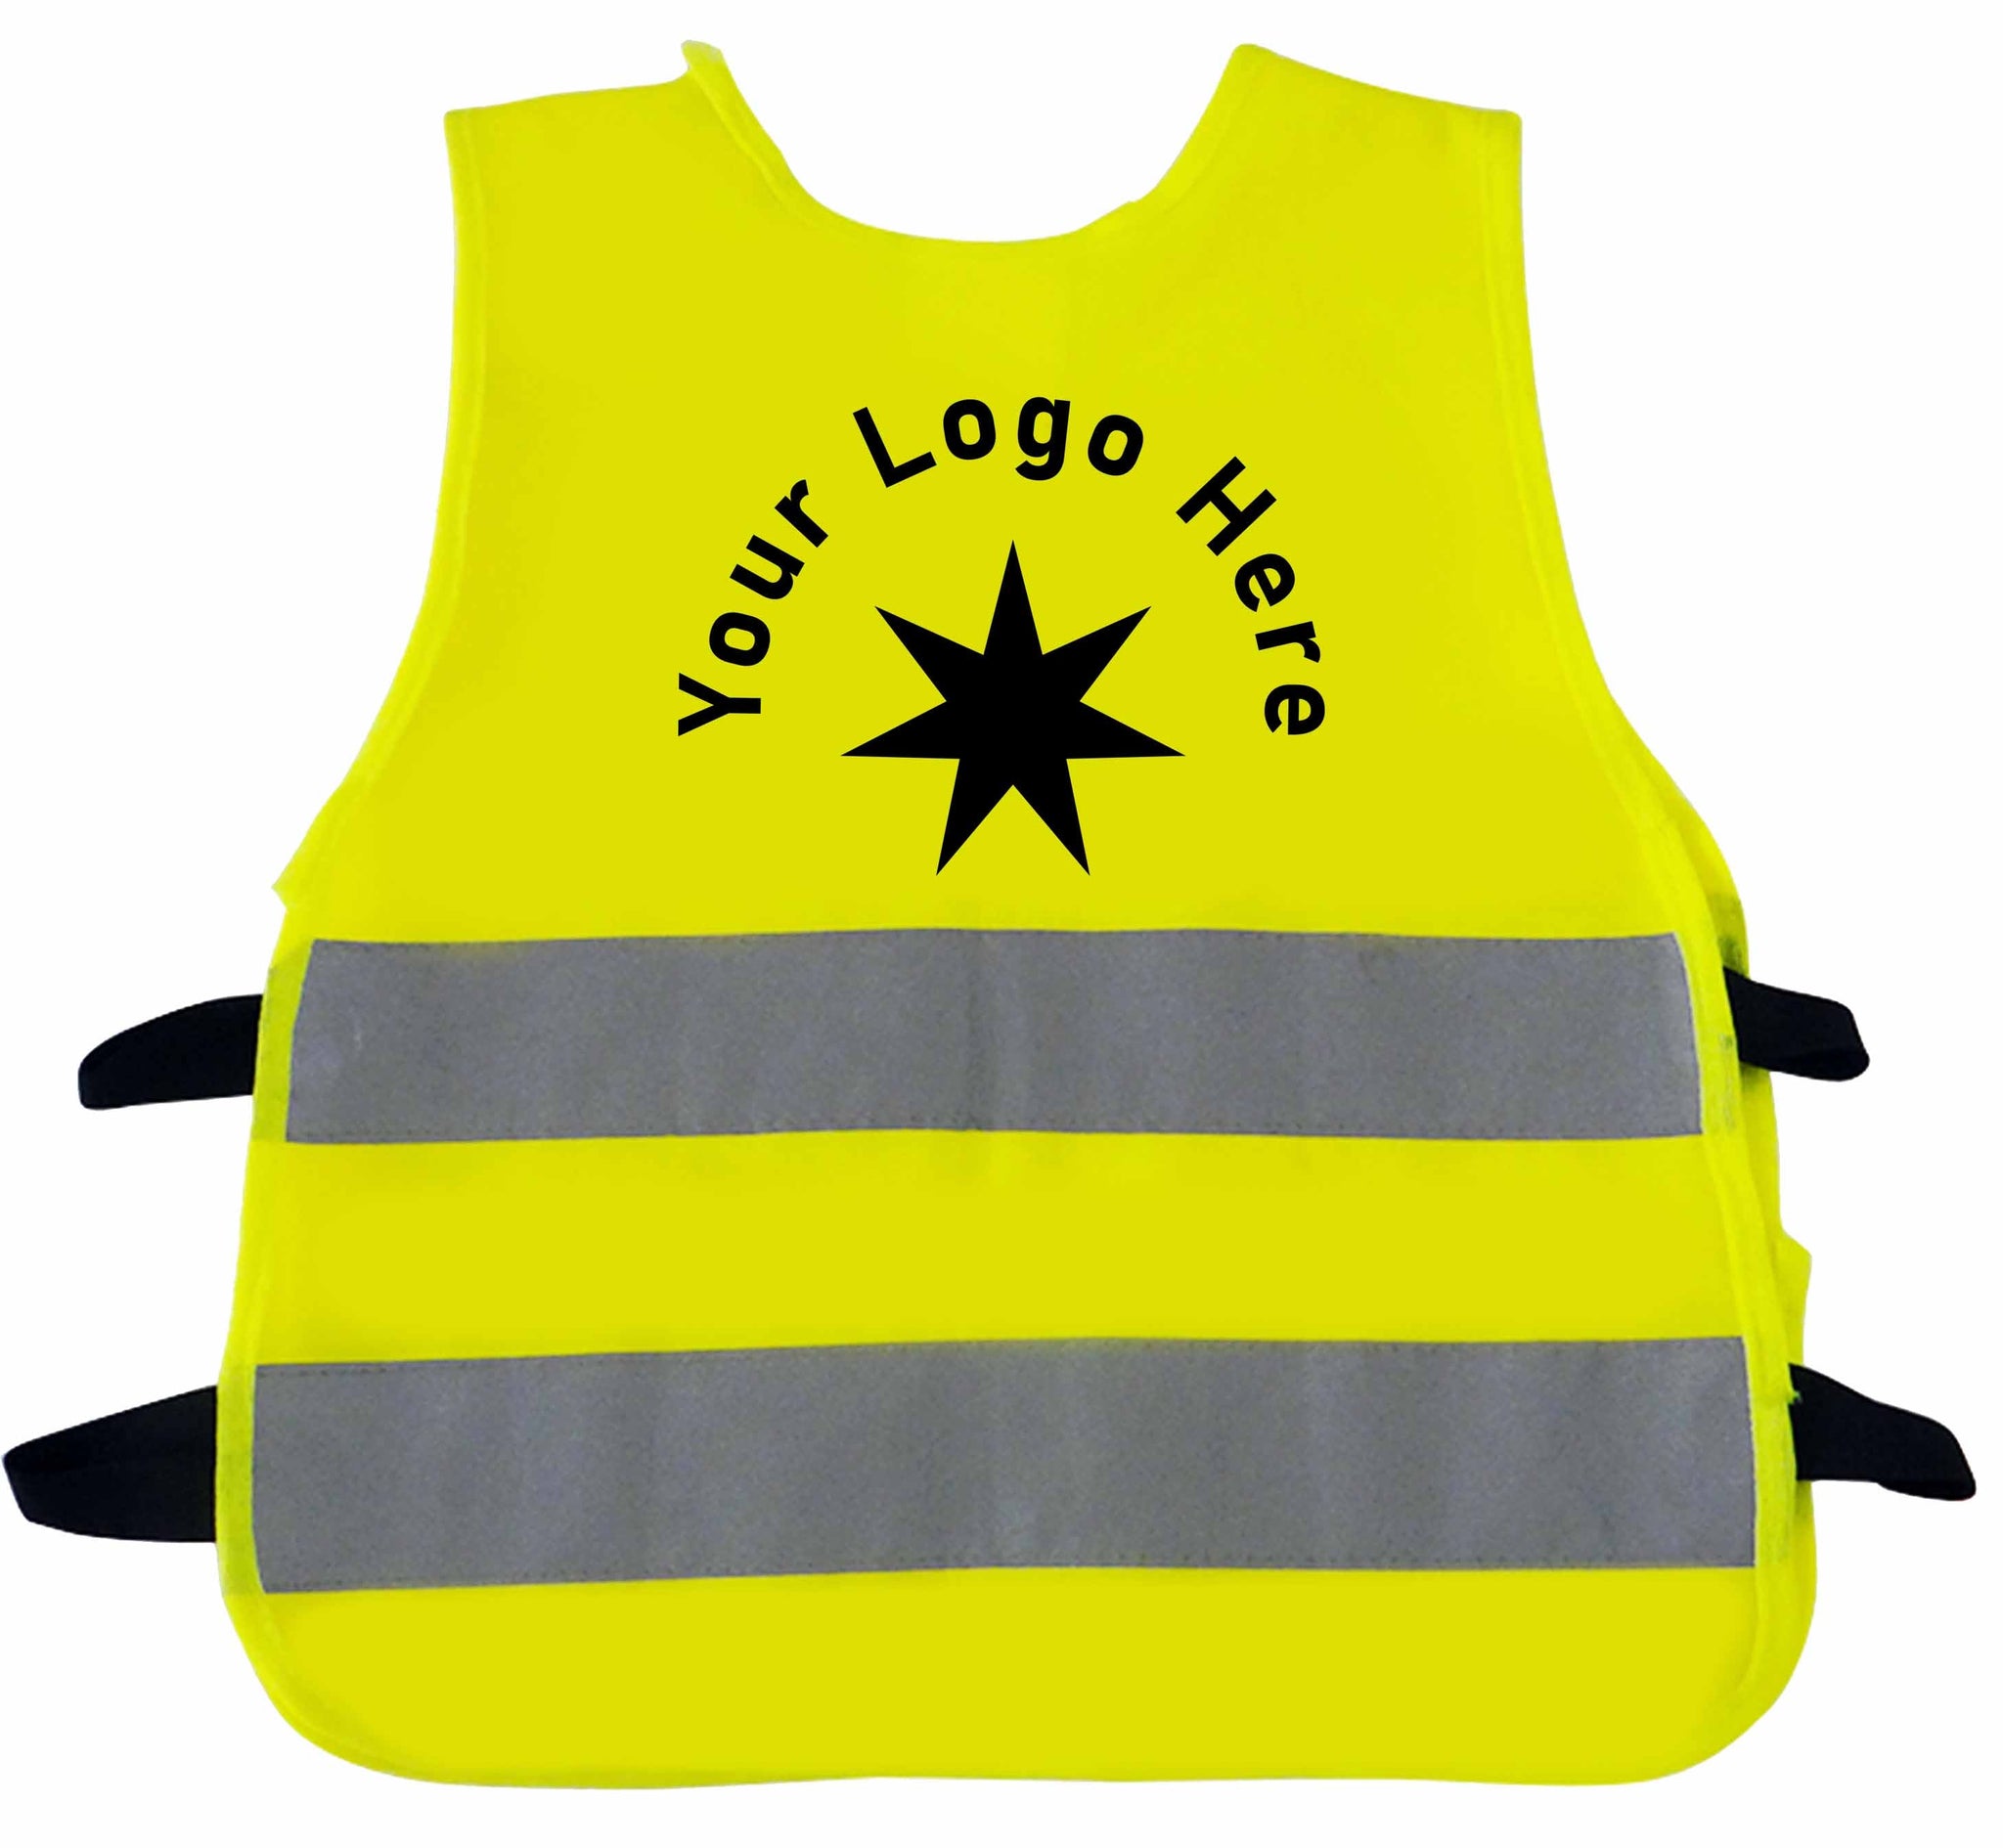 Safety Vest - Bib Style - Printed